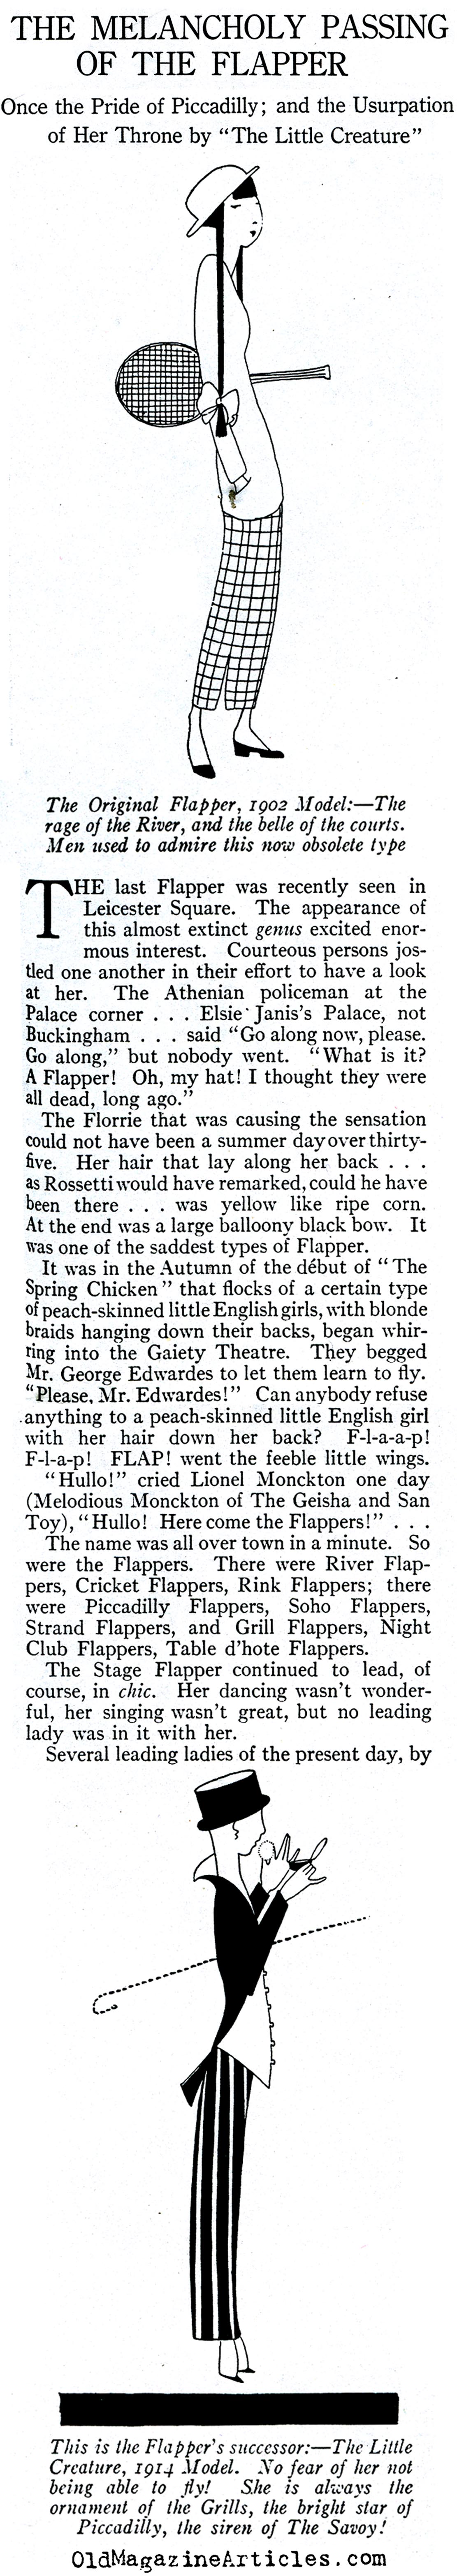 British Flappers (Vanity Fair Magazine, 1914)